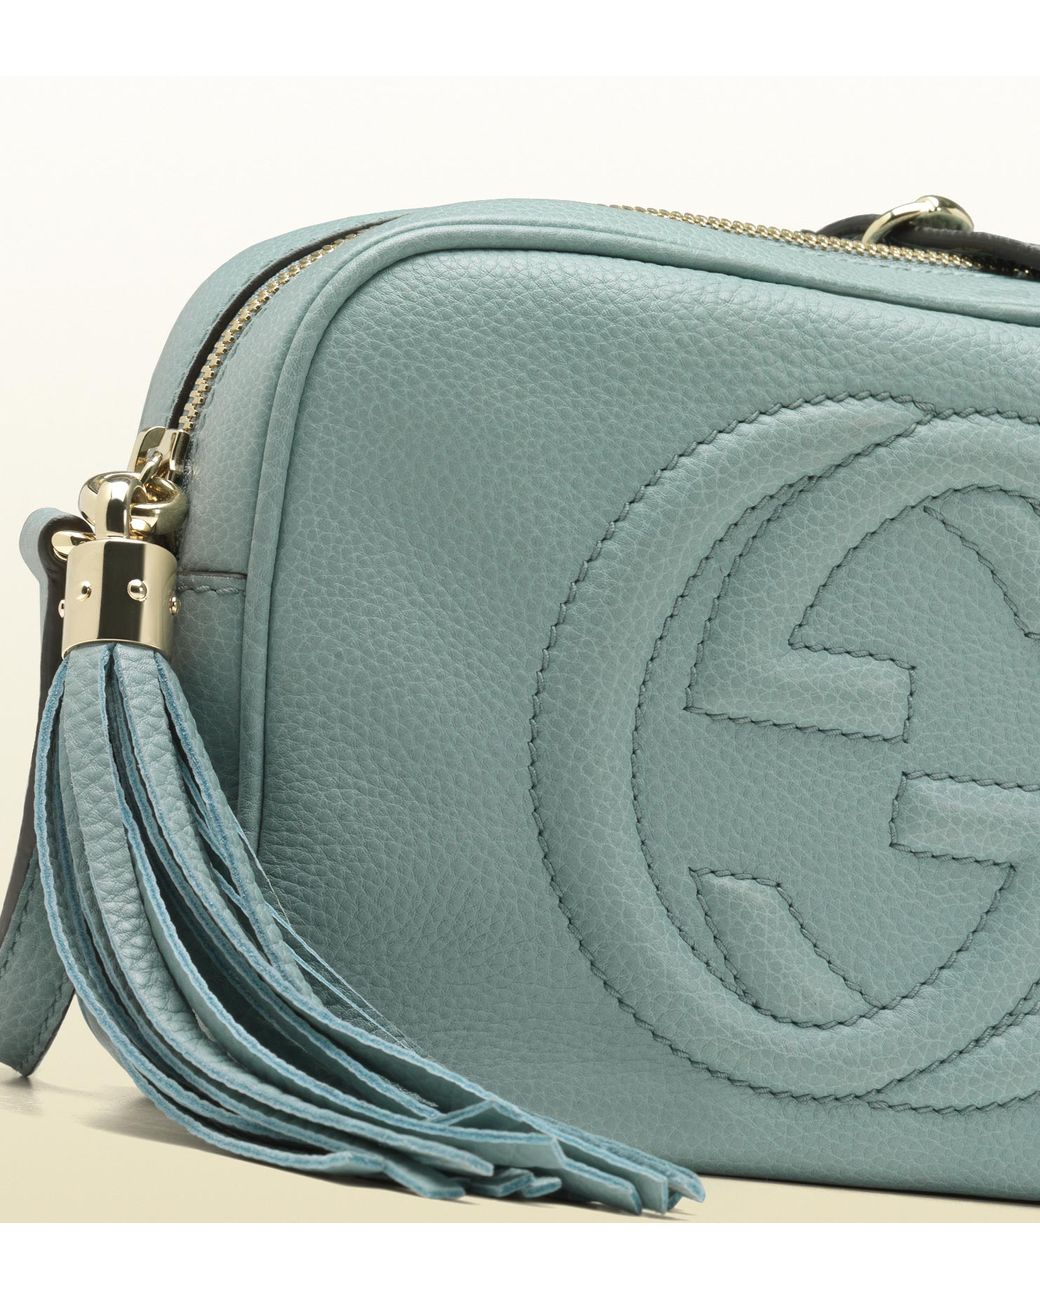 Gucci Soho Light Blue Leather Disco Bag | Lyst